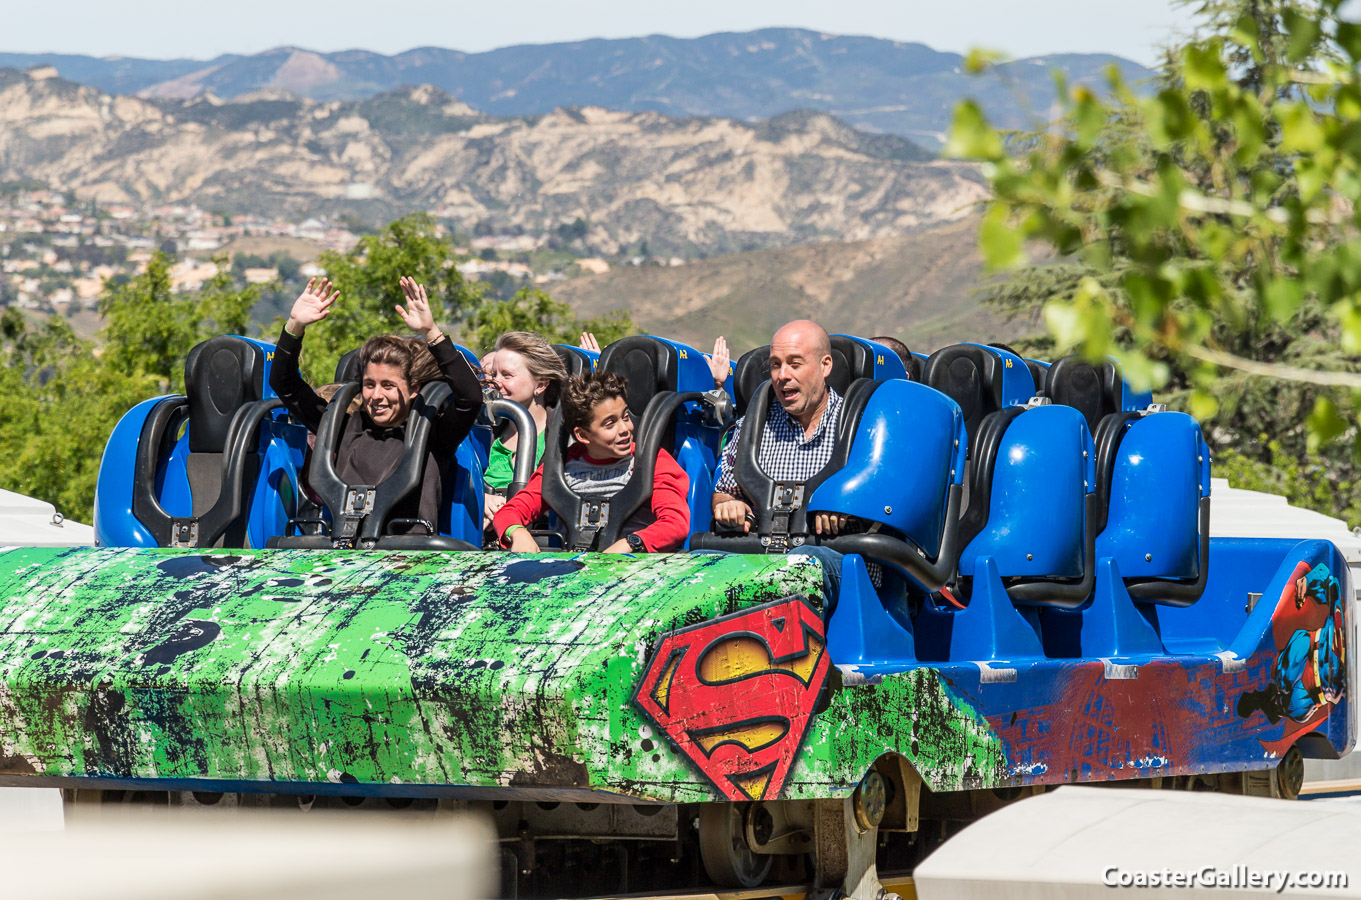 Facing backward on the Superman coaster